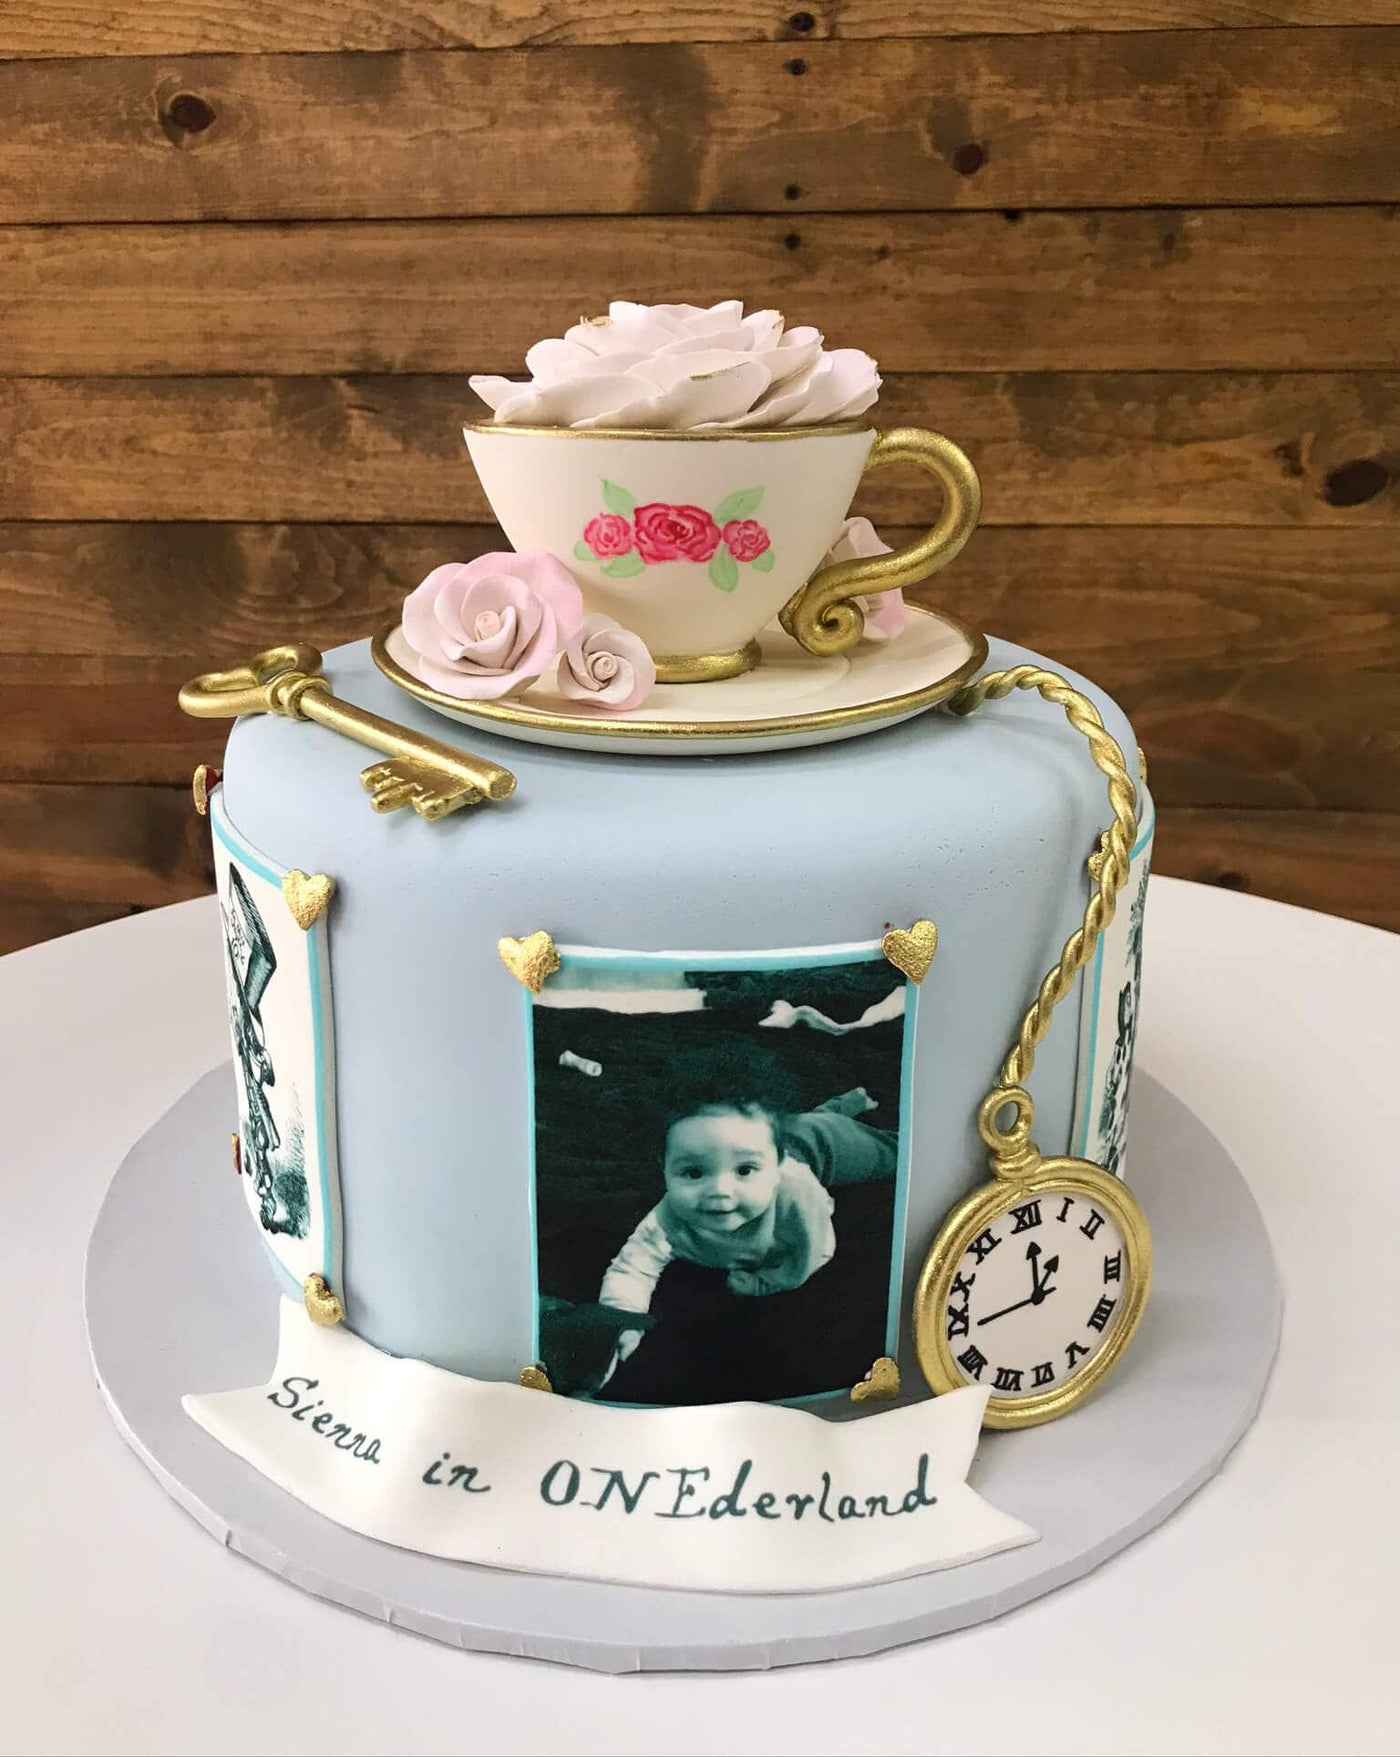 Onederland Cake - Sweet E's Bake Shop